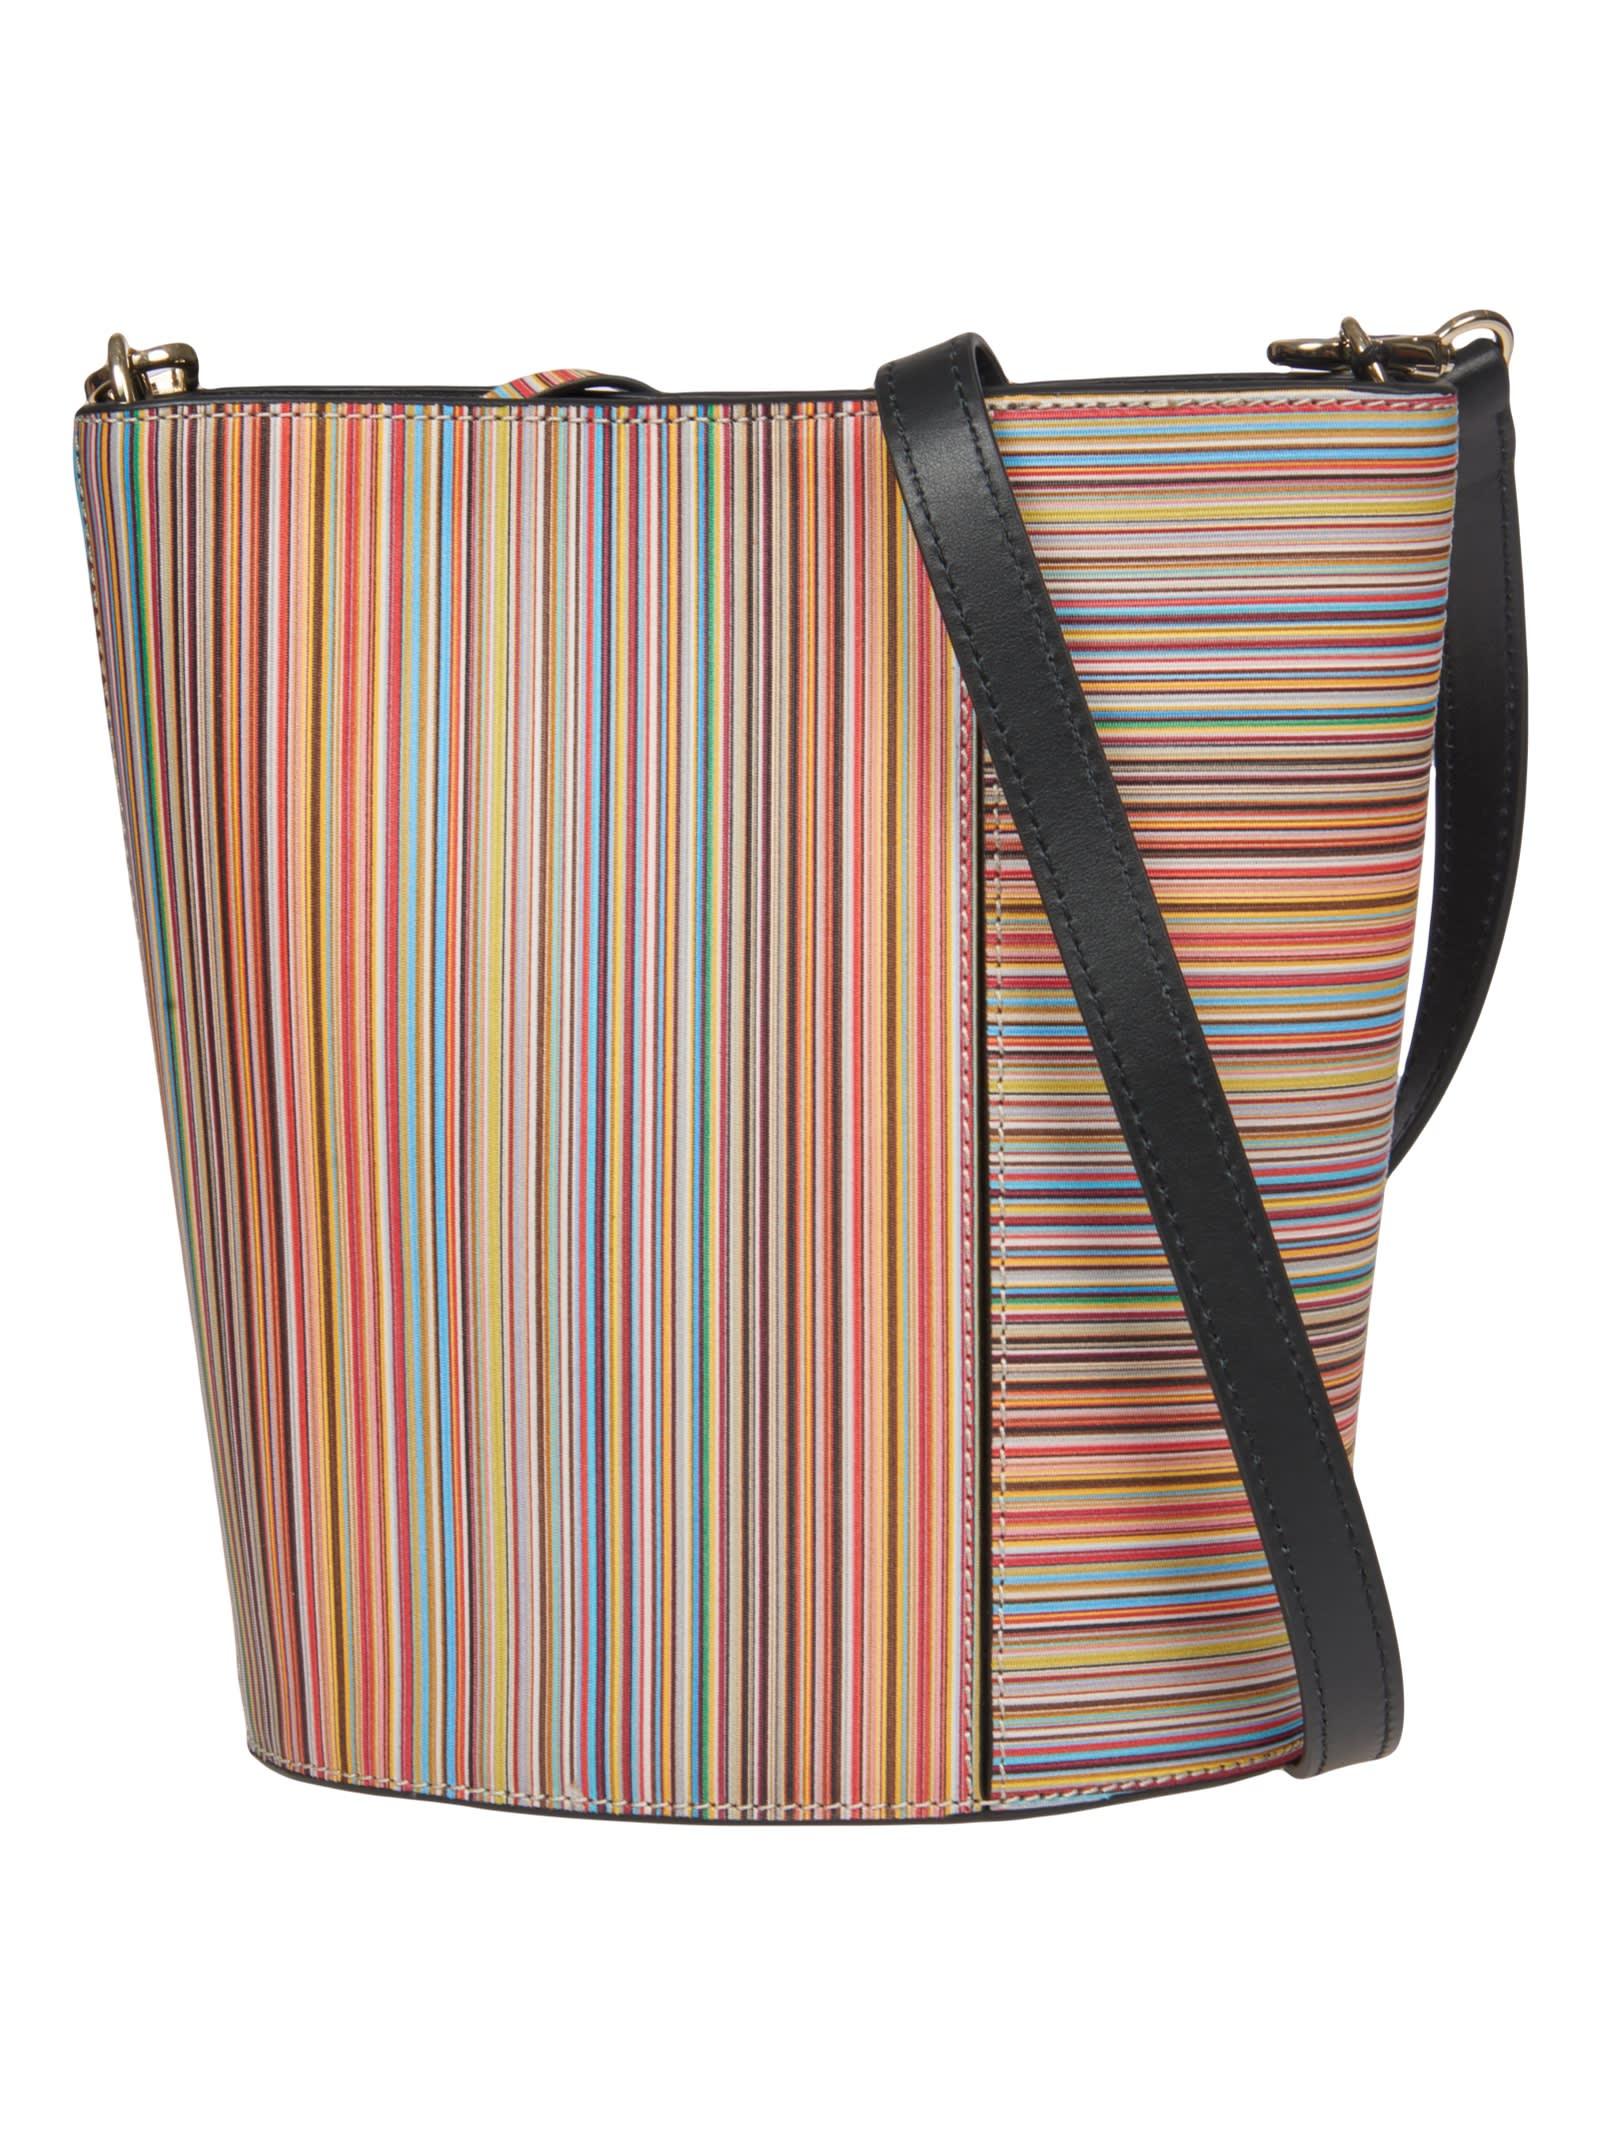 Bucket Bag With Swirl Print In Multi